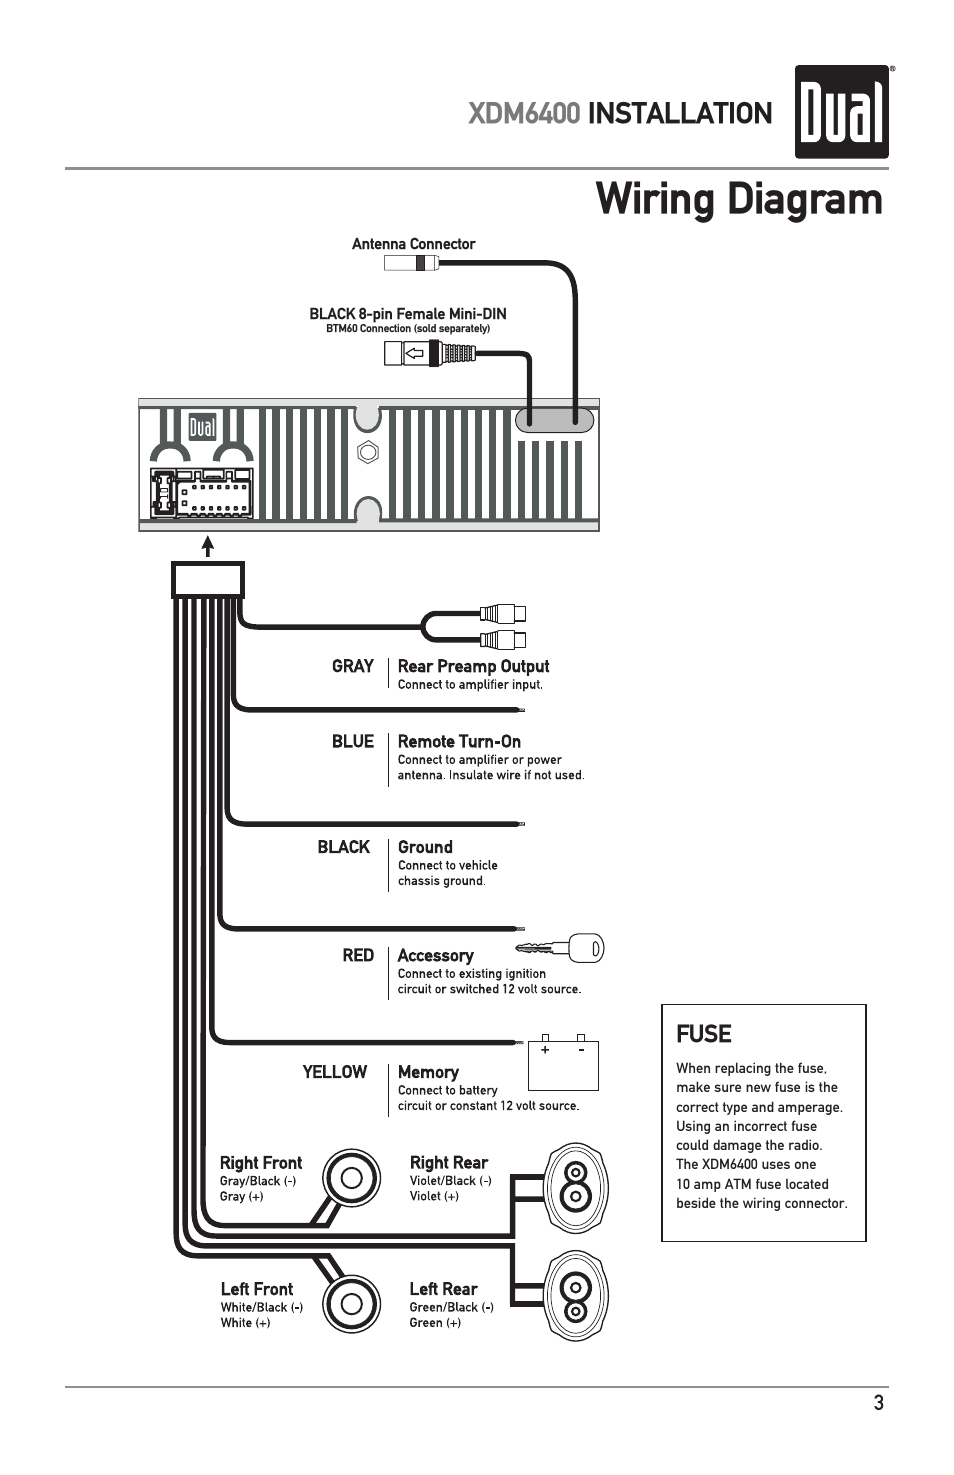 Wiring diagram, Xdm6400 installation | Dual Electronics XDM6400 User